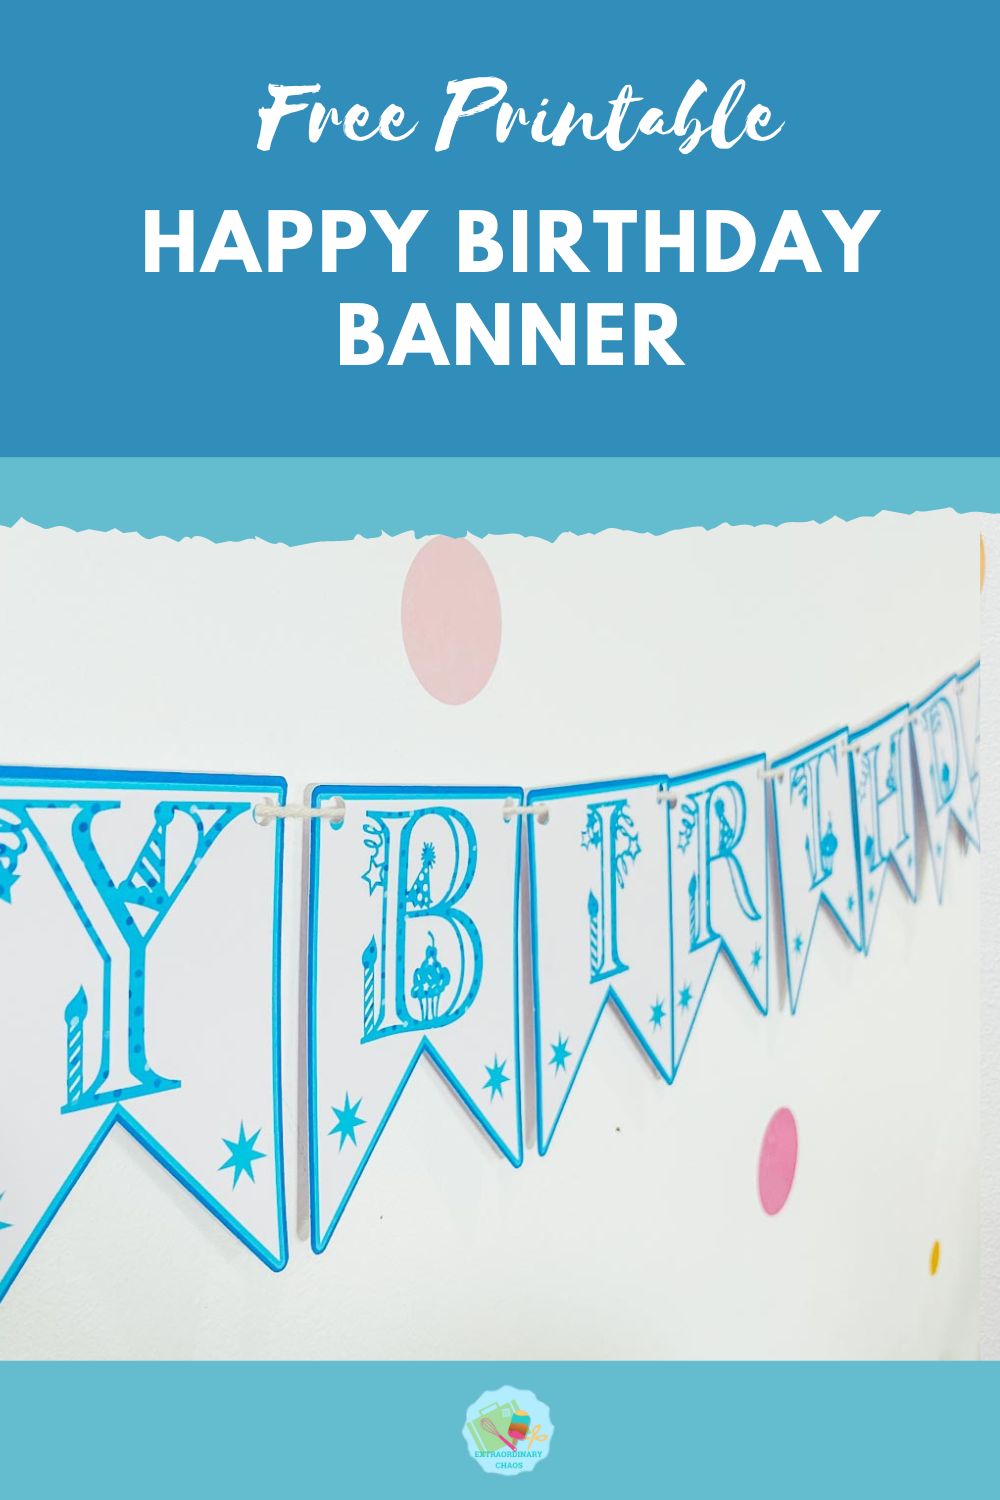 Free printable Happy Birthday Banner